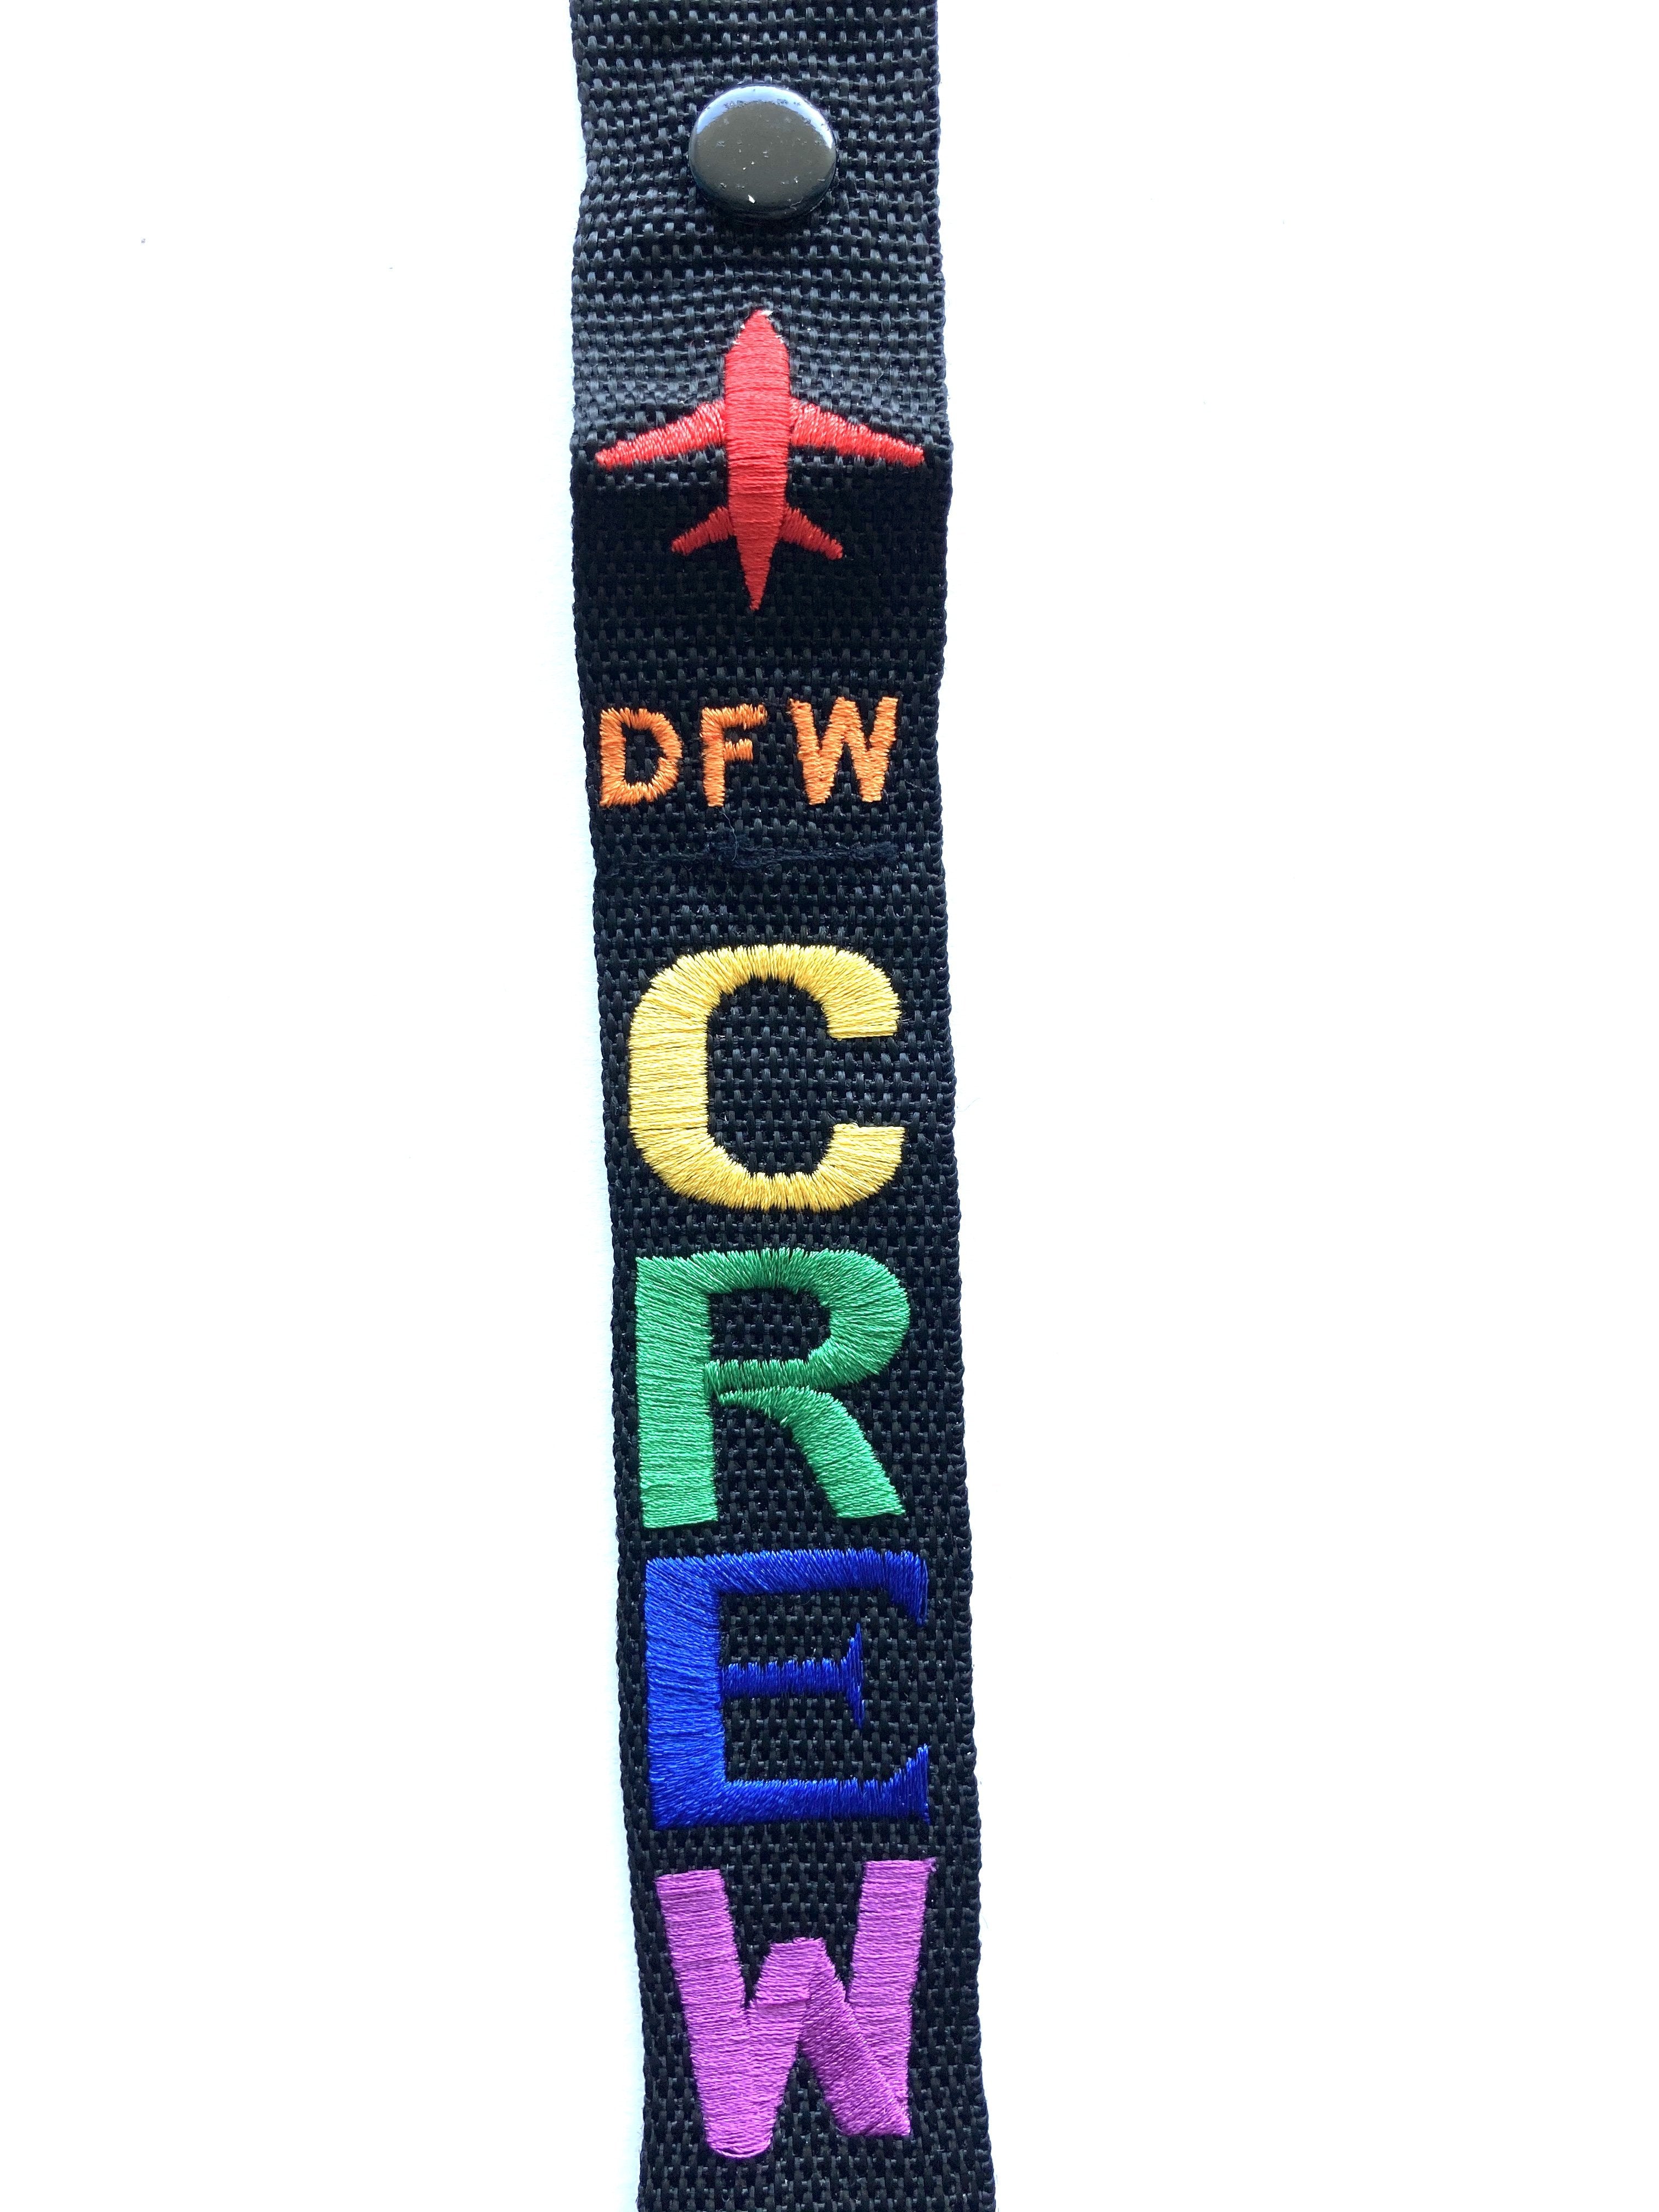 CREW Luggage Tag - DFW Pride